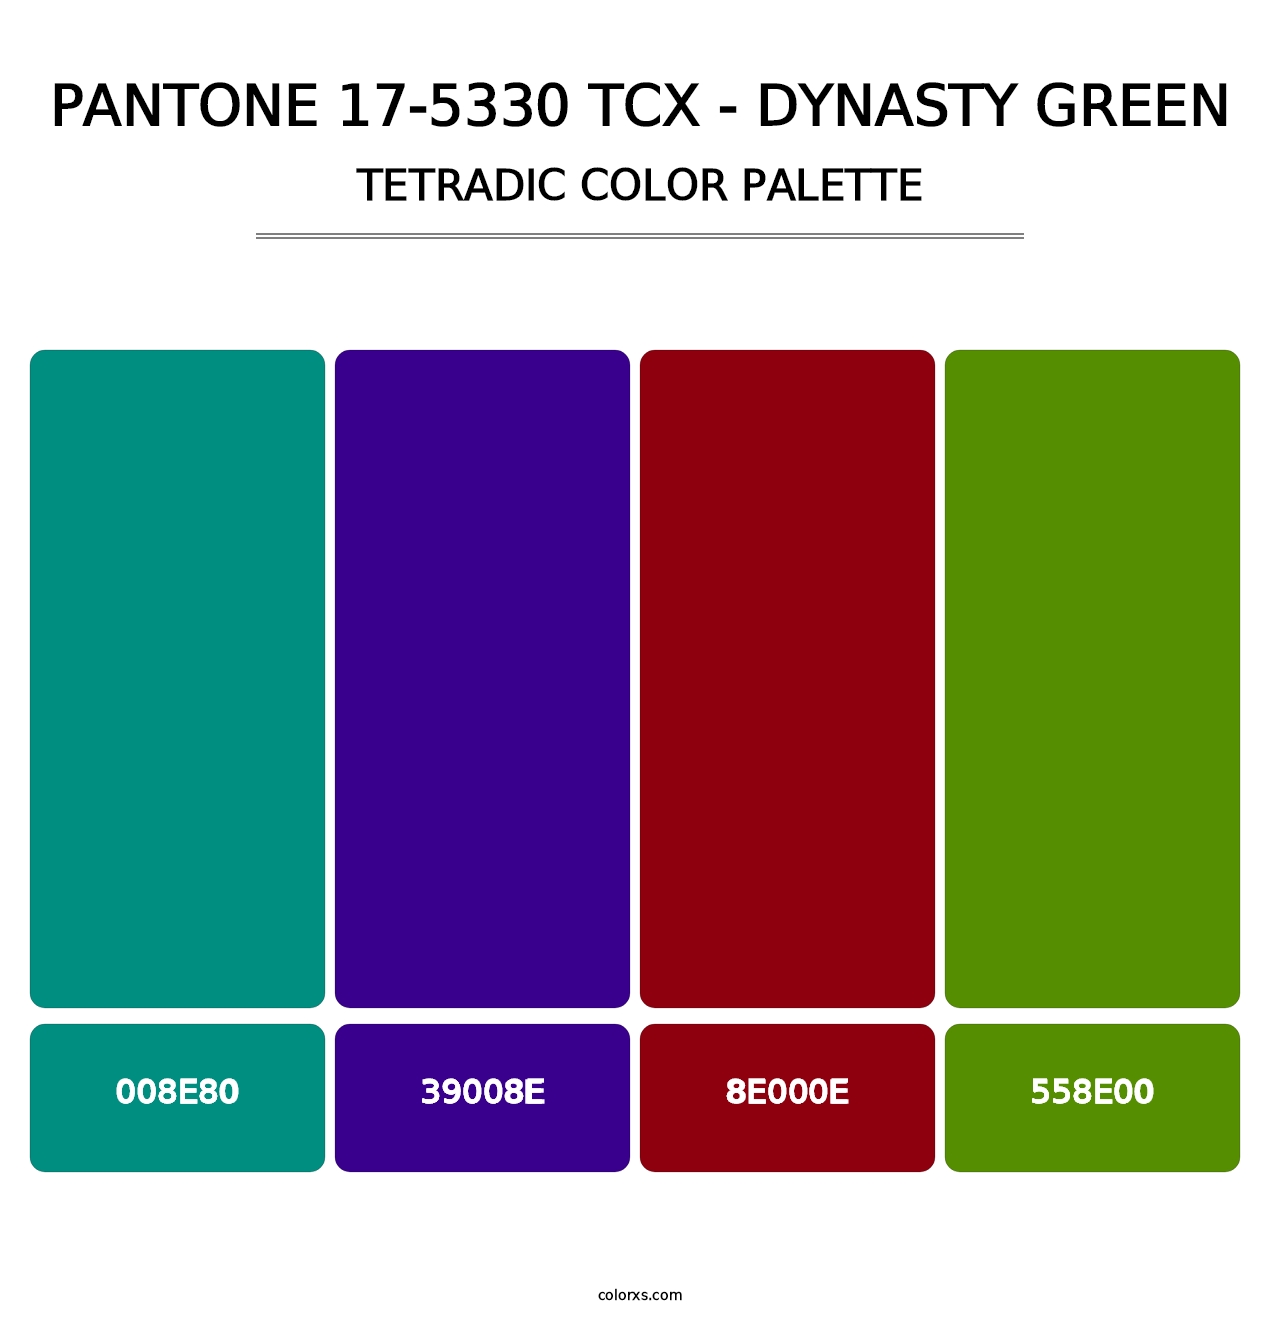 PANTONE 17-5330 TCX - Dynasty Green - Tetradic Color Palette